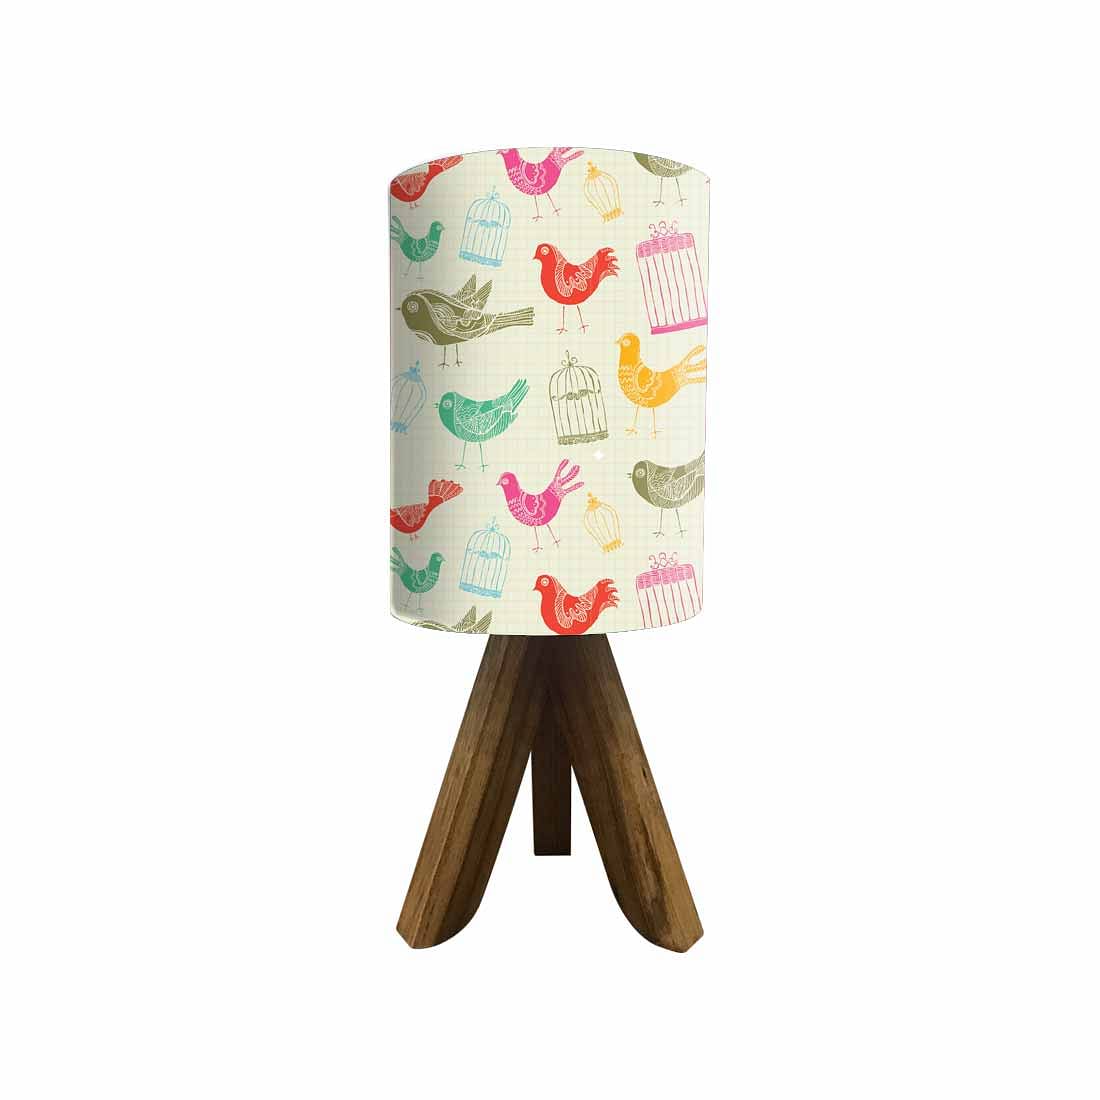 Unique Wood Table Lamps For Bedroom - Birds Nutcase